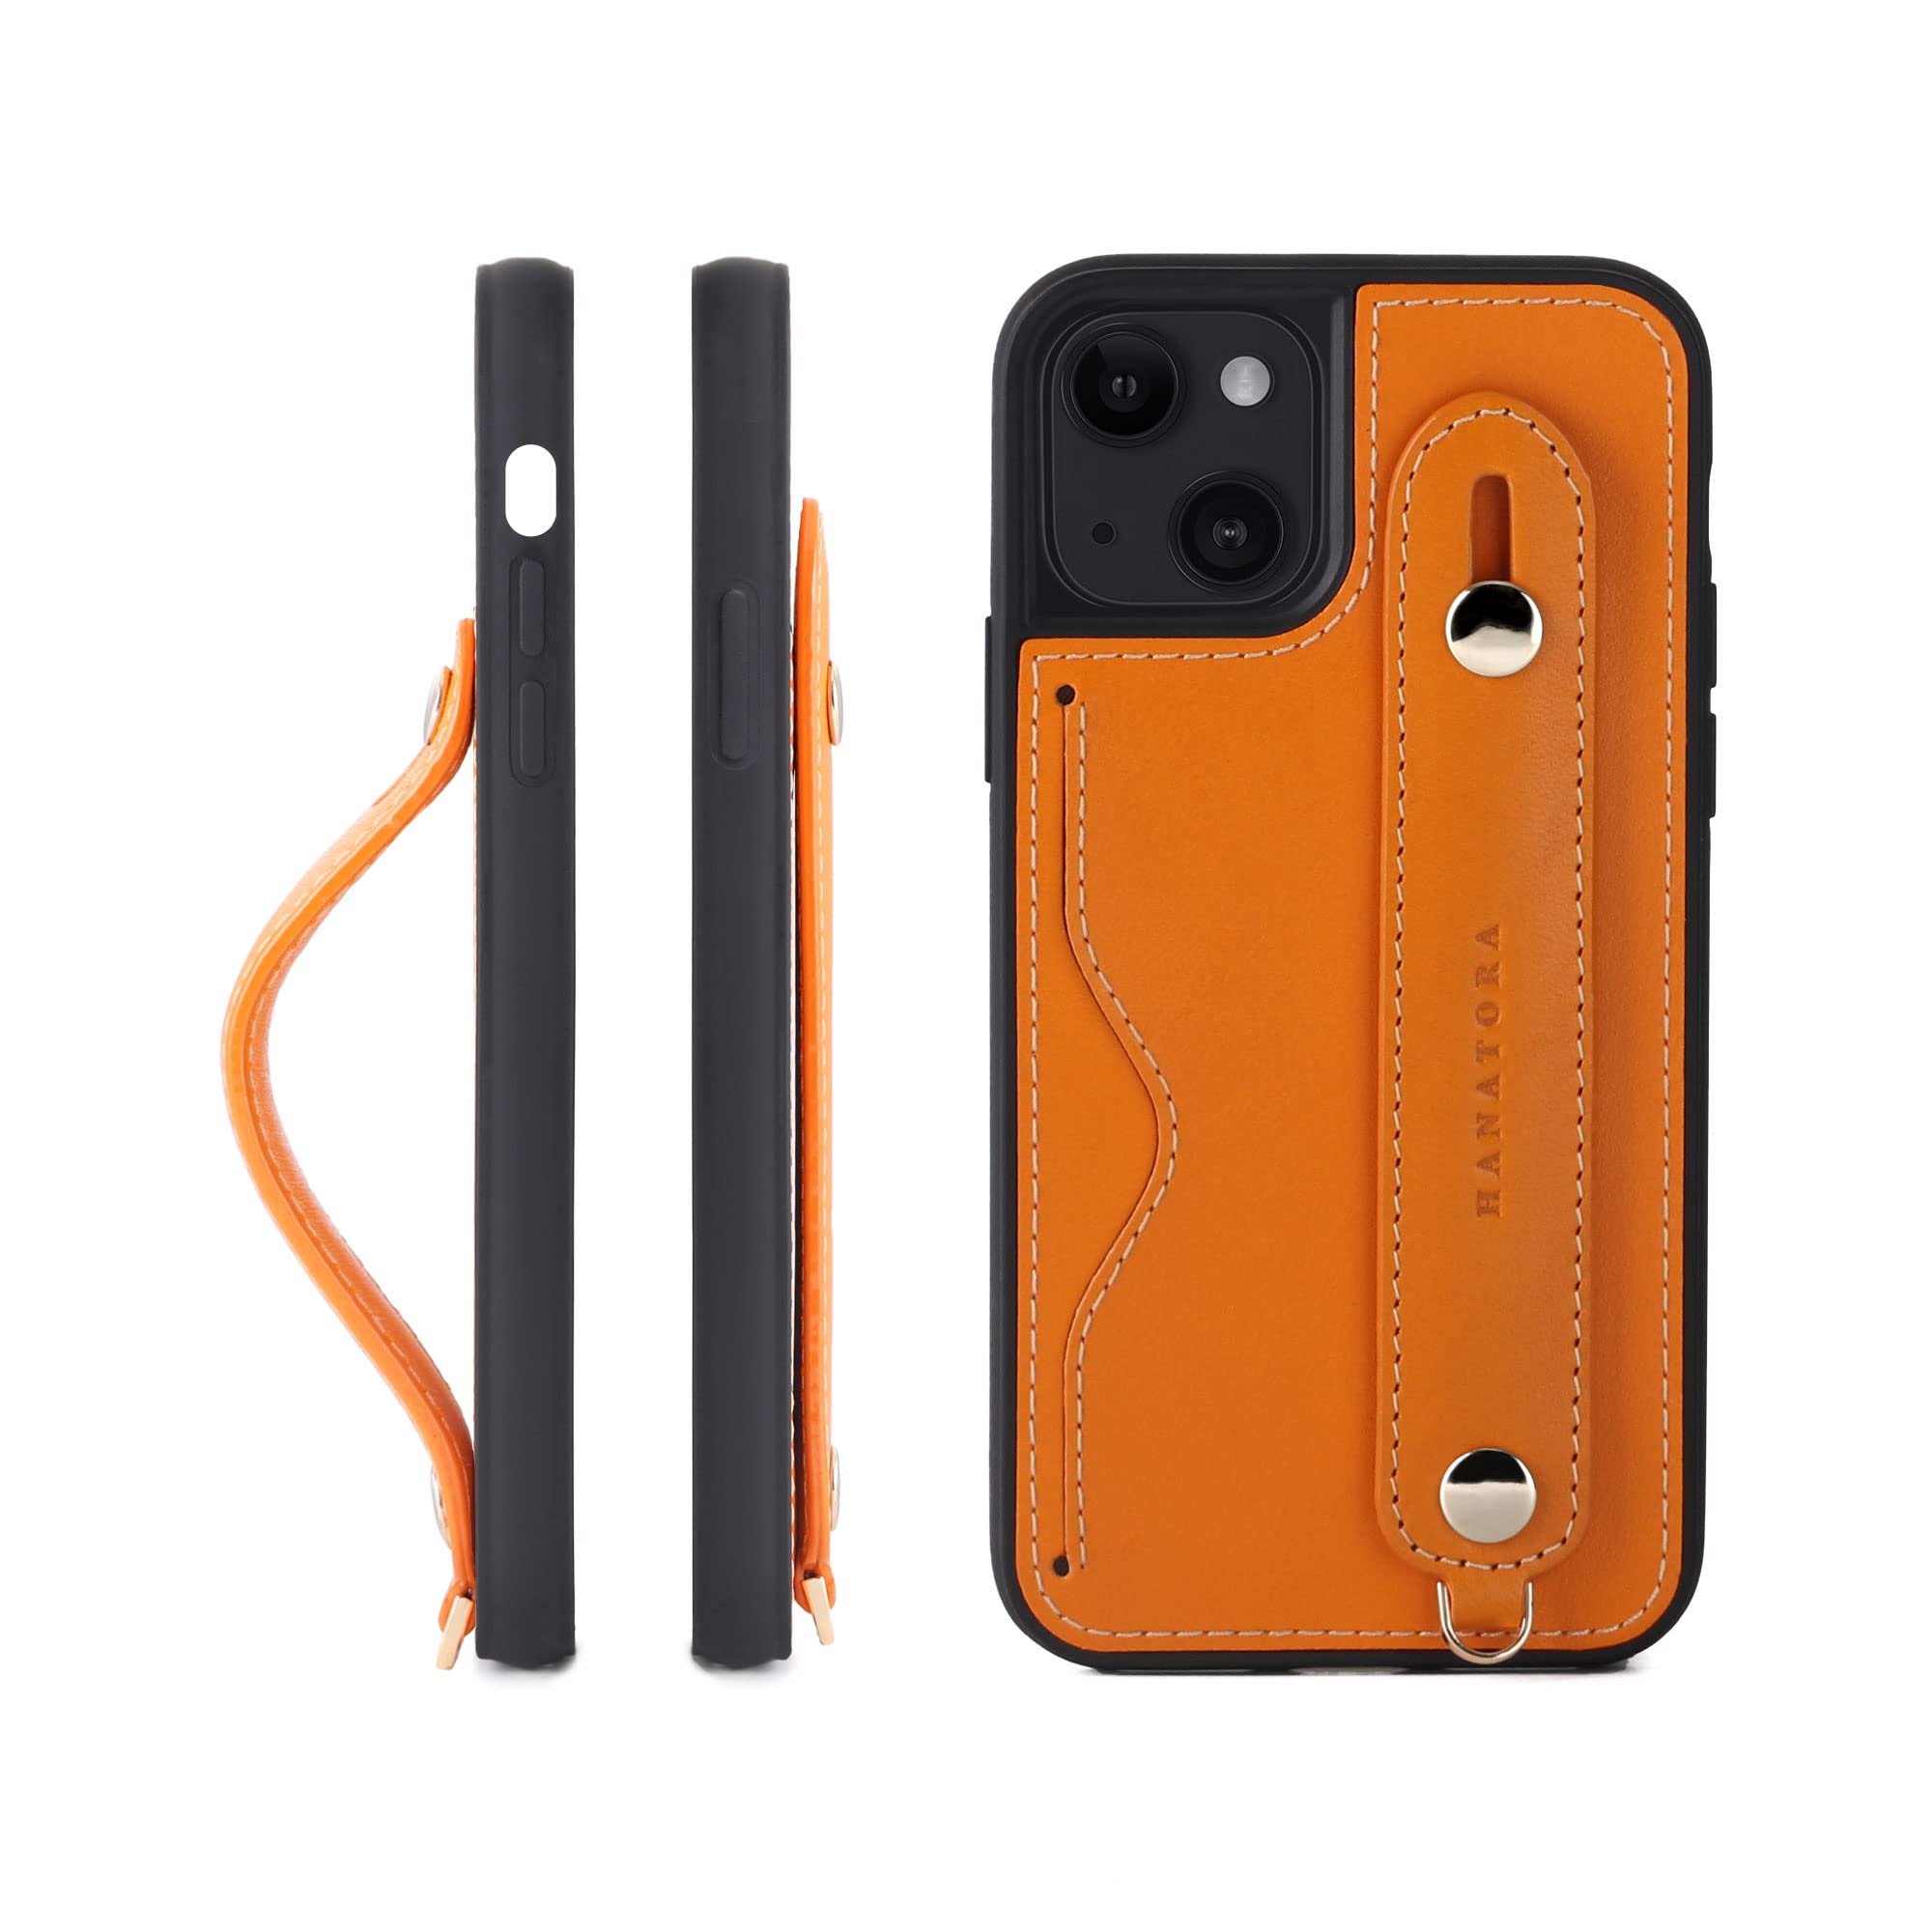 [HANATORA] iPhone13 mini ケース 本革 グリップケース レザー ストラップ付属 イタリア製牛革 ヌメ革 片手操作 カード収納 スタンド機能 メンズ レディース オレンジ CGH-13Mini-Orange